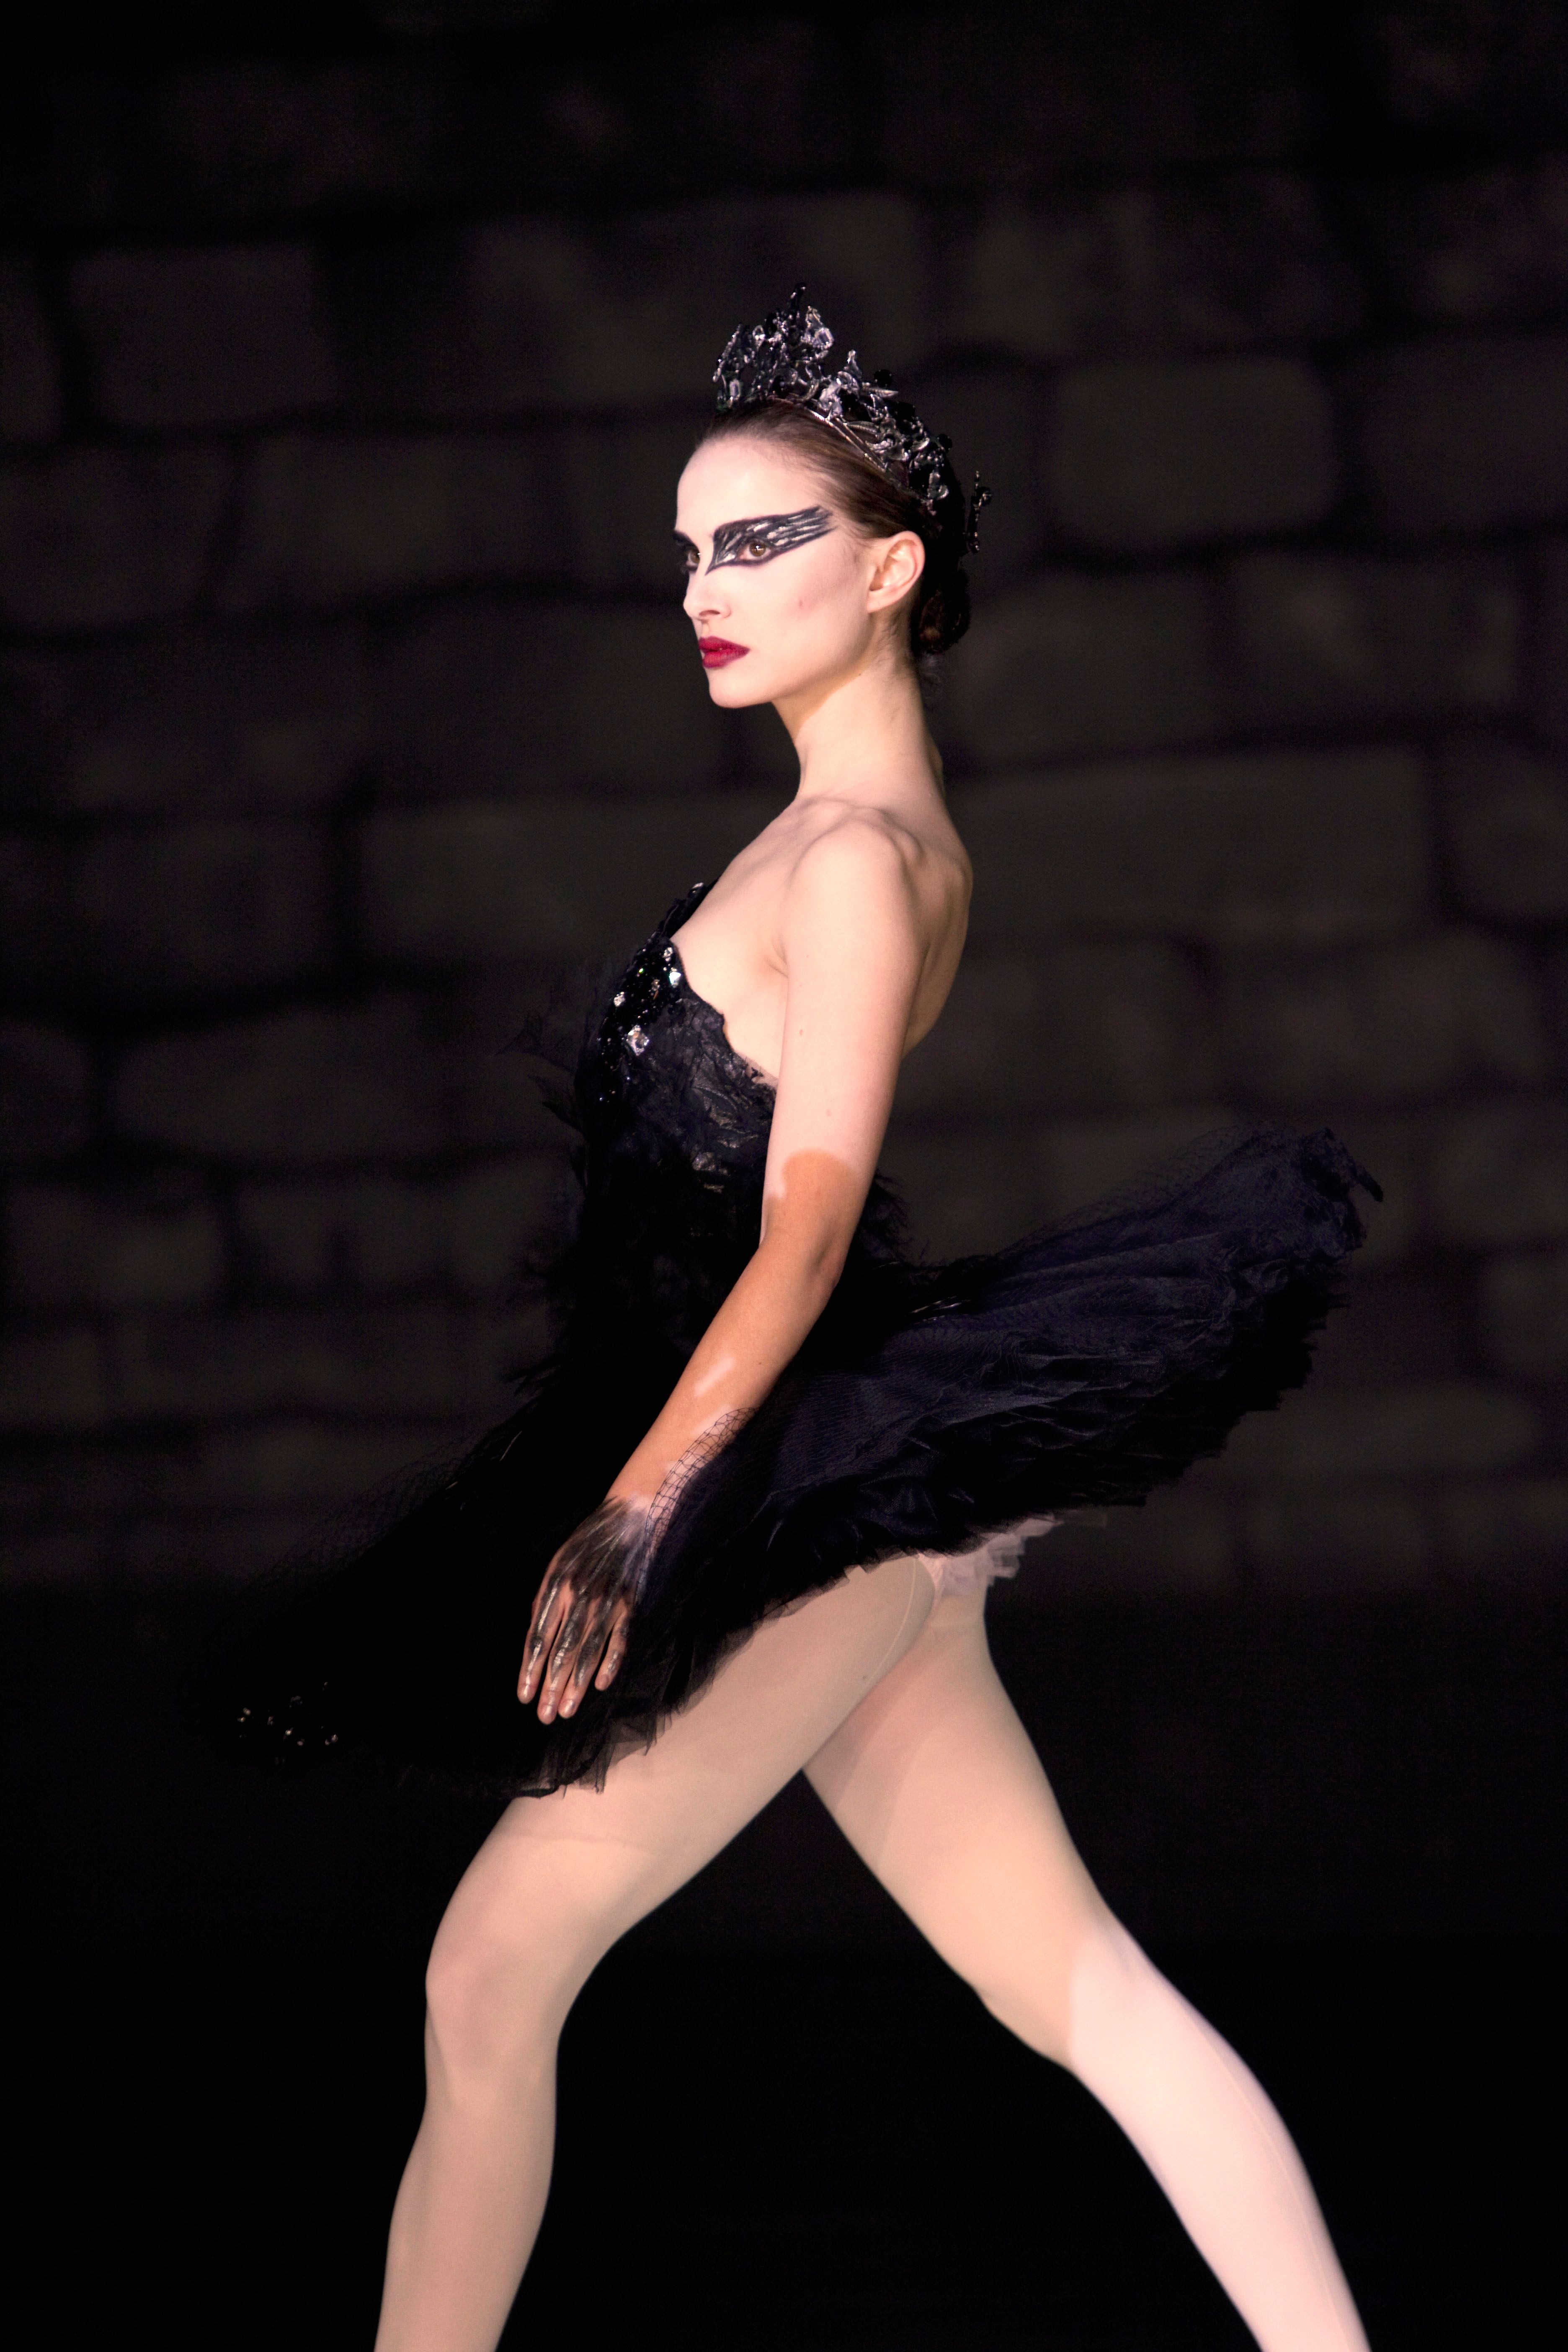 Natalie Portman as the Black Swan